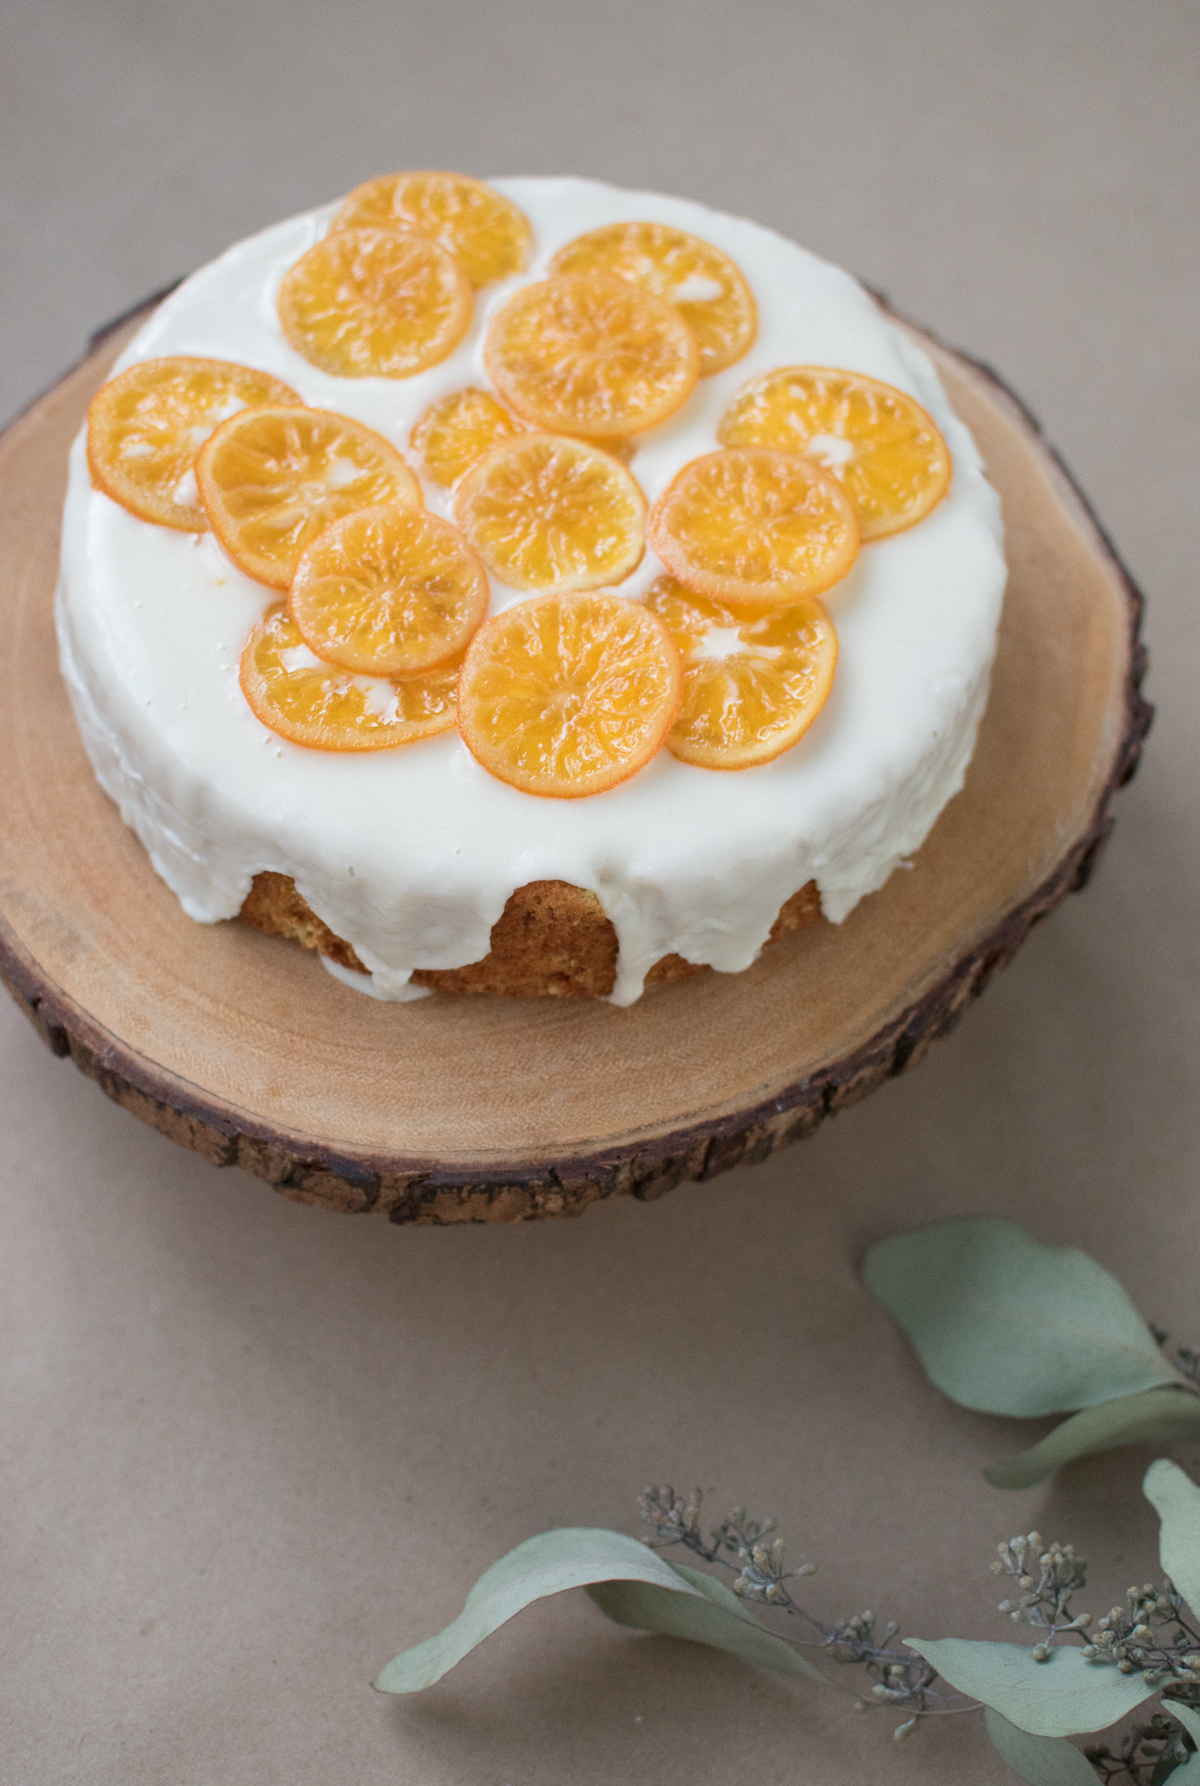 walter mitty clementine cake